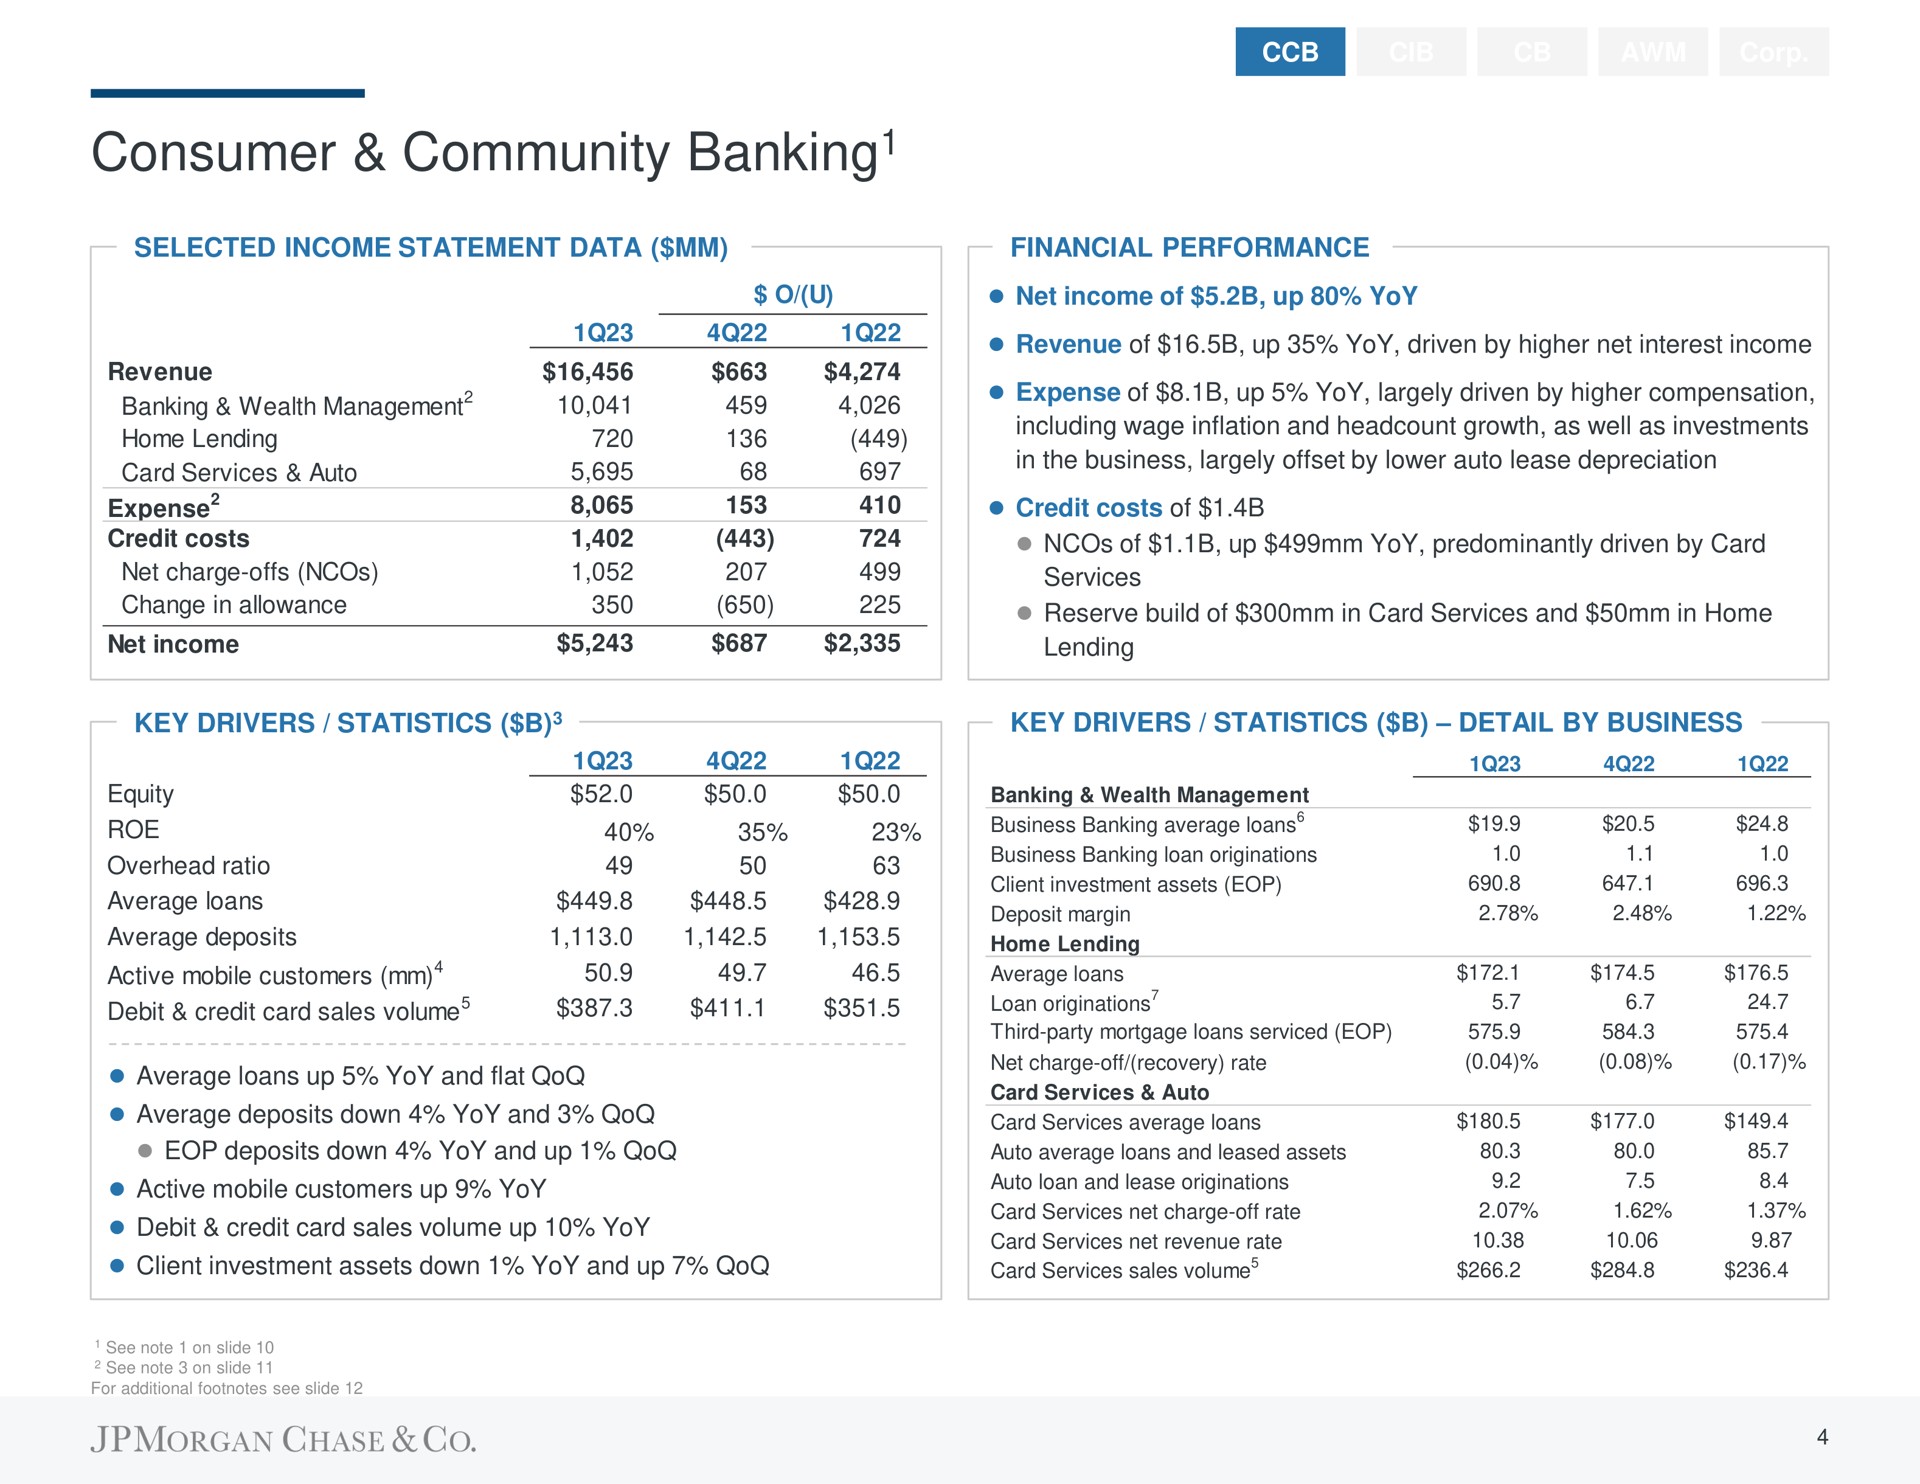 consumer community banking banking average loans deposit margin | J.P.Morgan